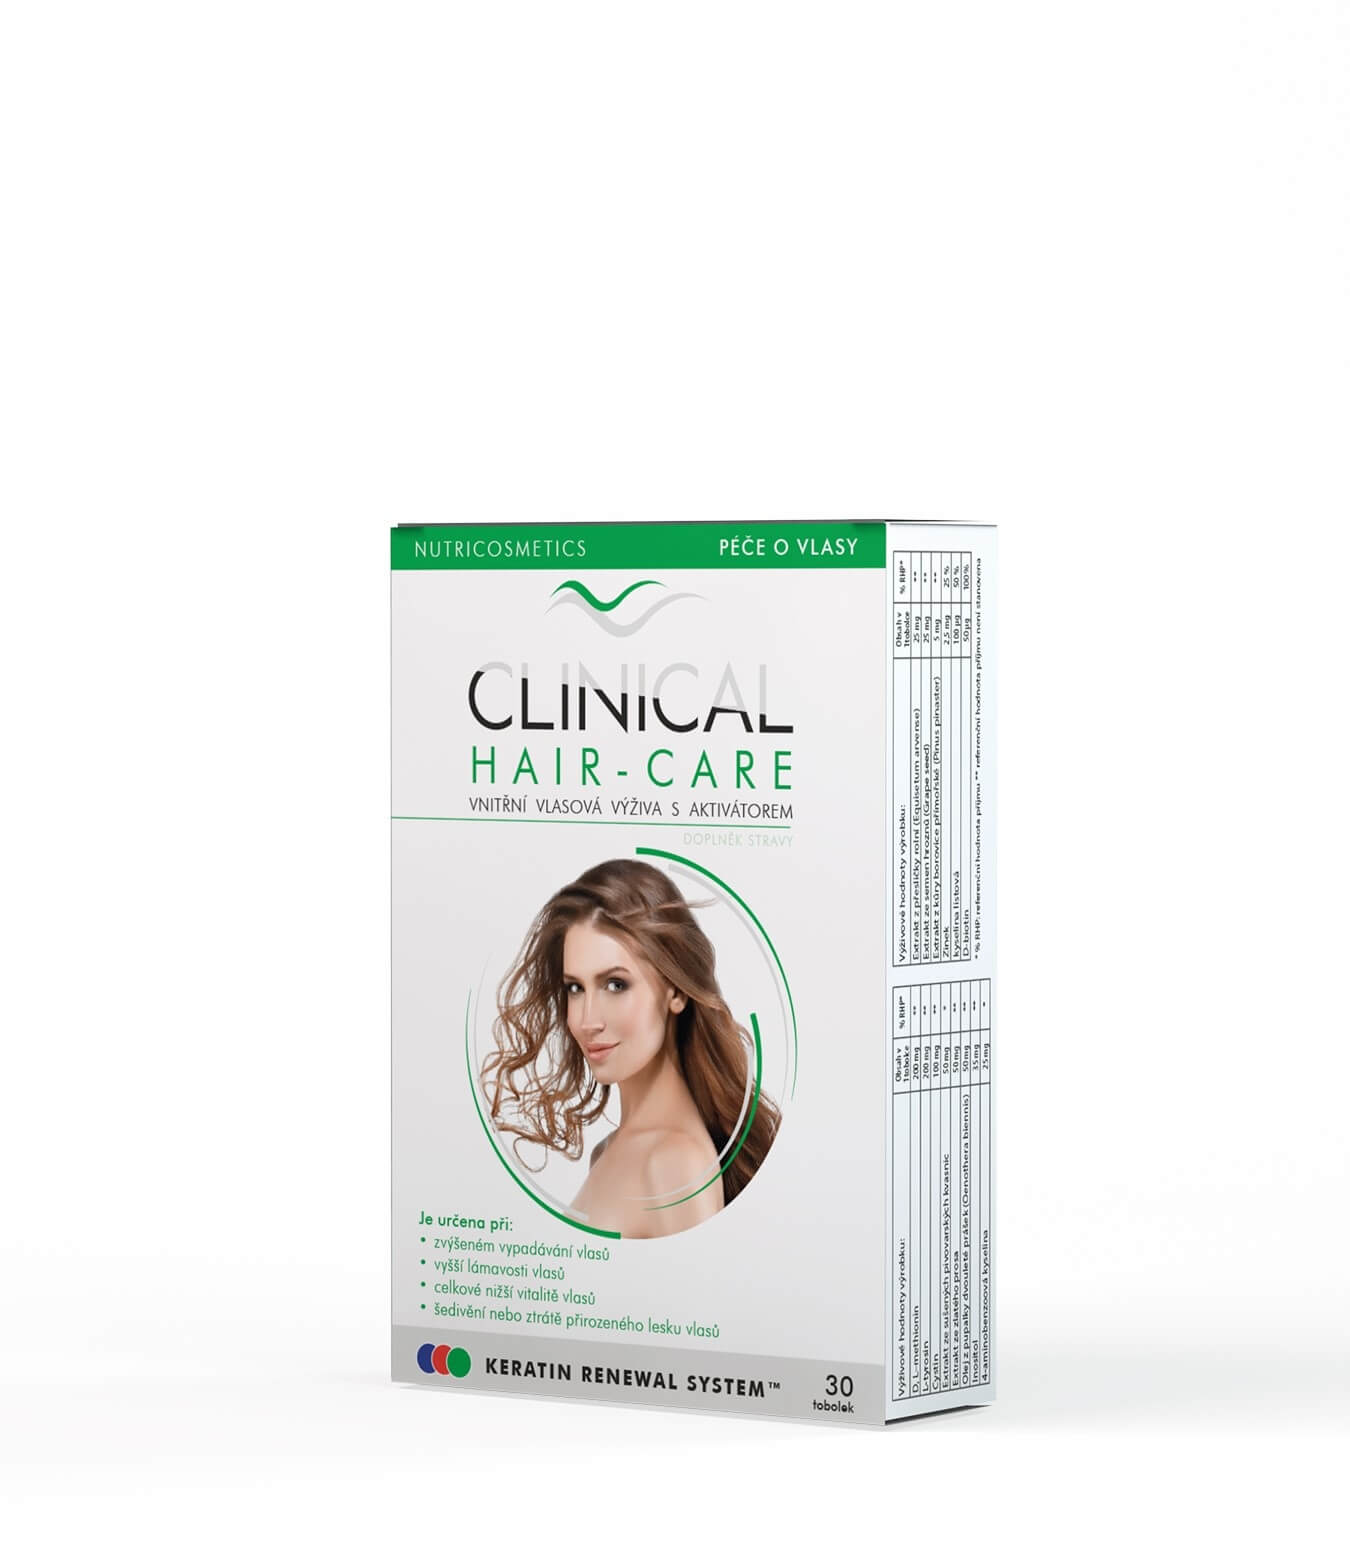 Zobrazit detail výrobku Clinical Clinical Hair-Care tob.30 - kúra na 1. měsíc